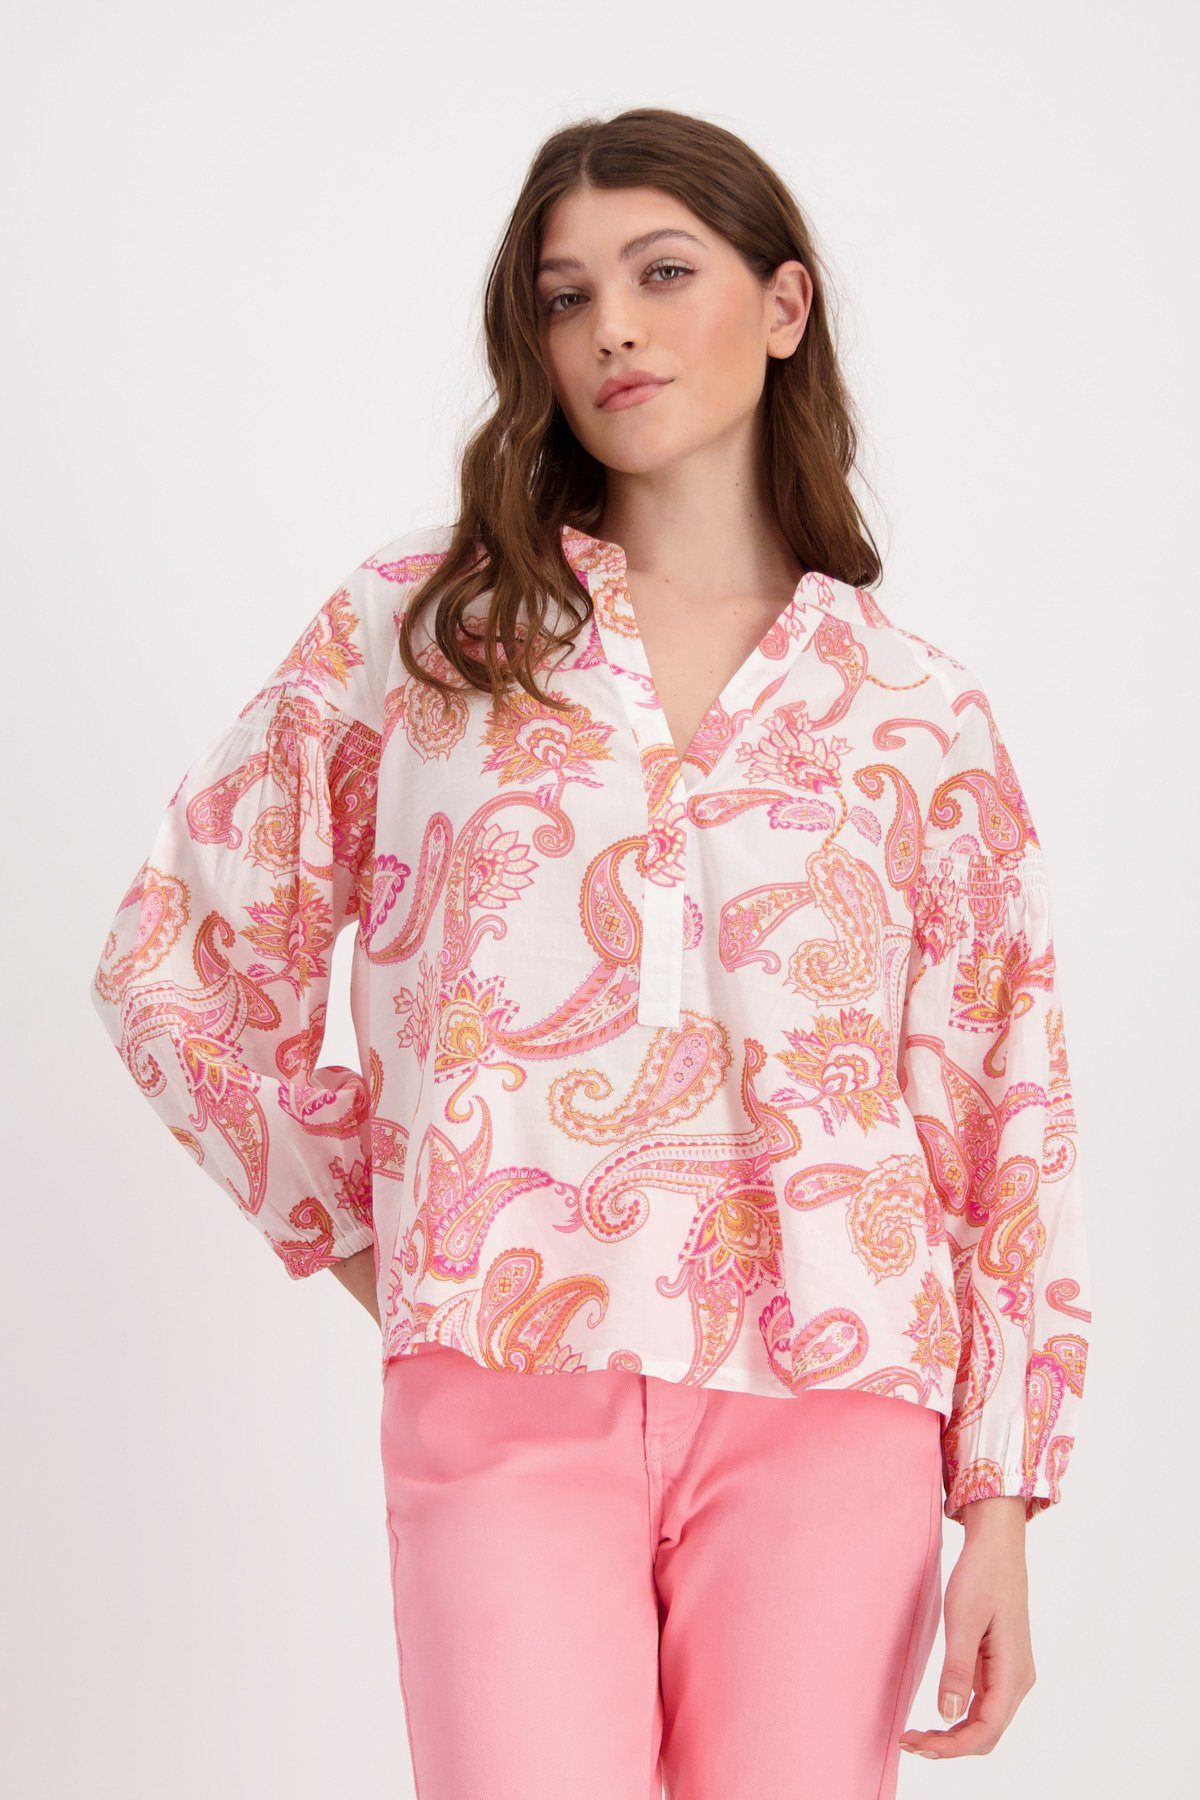 Monari Klassische Bluse Paisley Muster Bluse mit Smoke Einsatz hibiscus gemustert